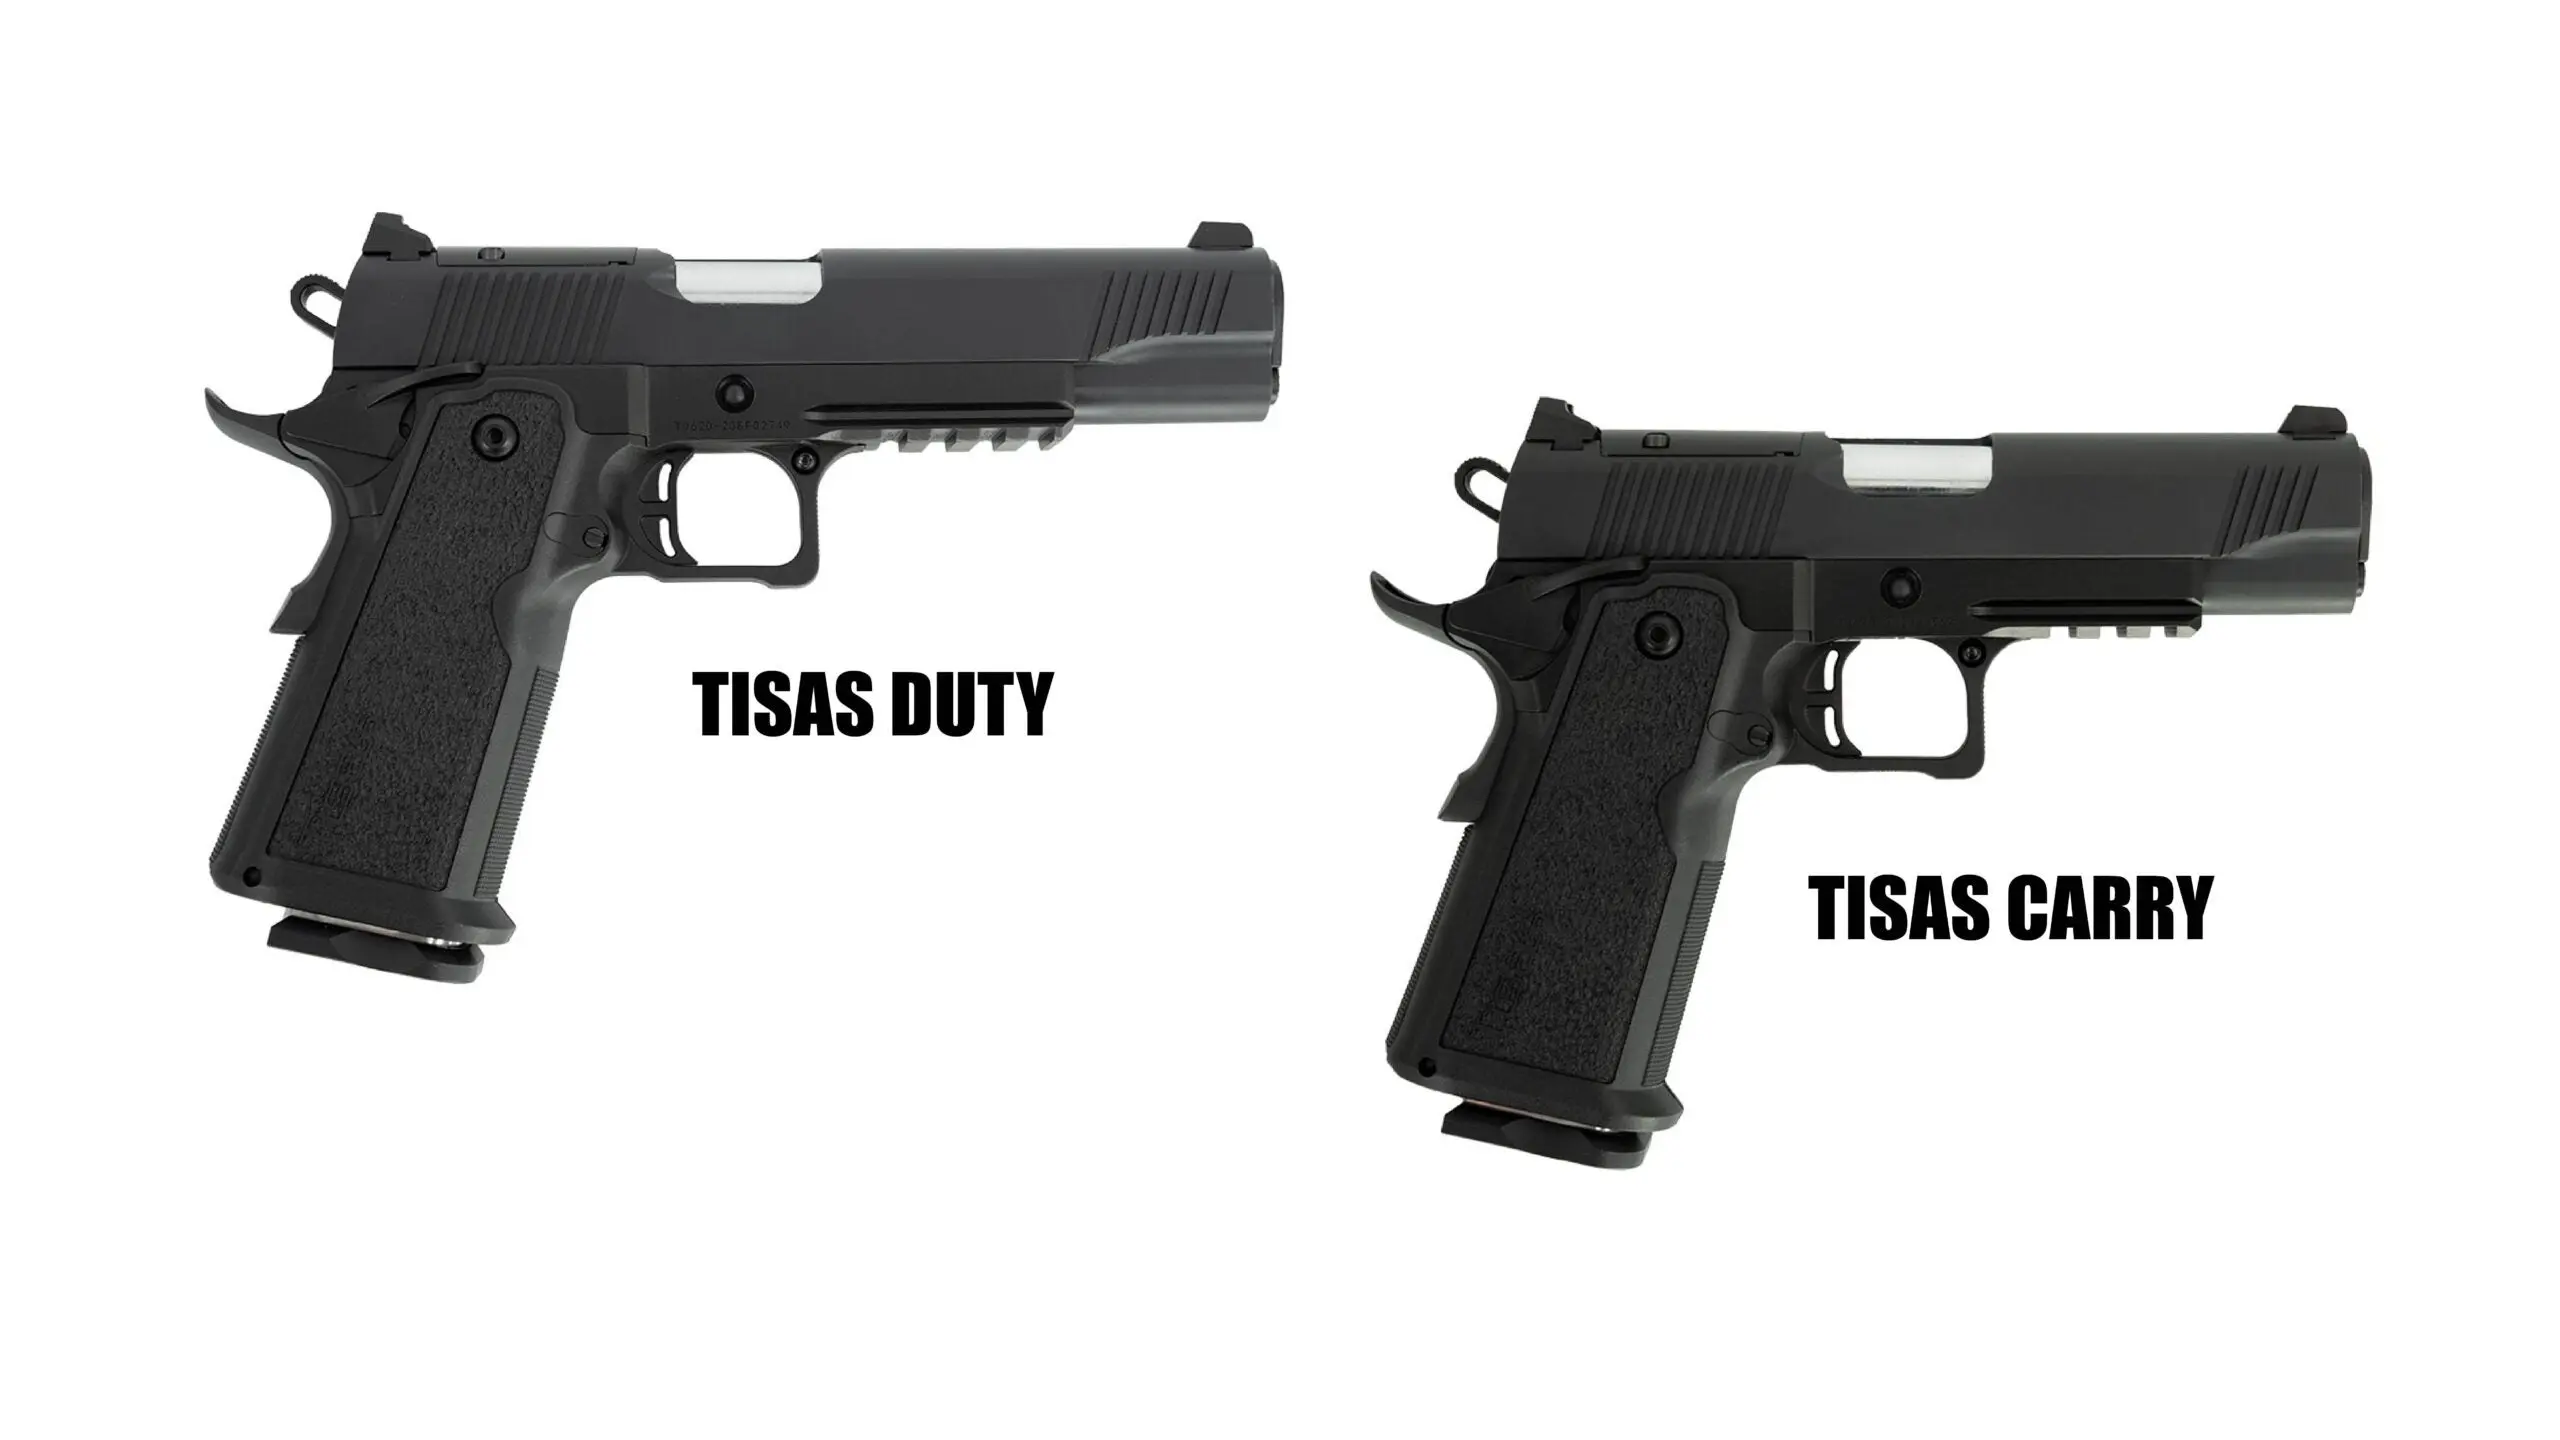 Tisas 1911 Duty &amp; Carry handguns on white background